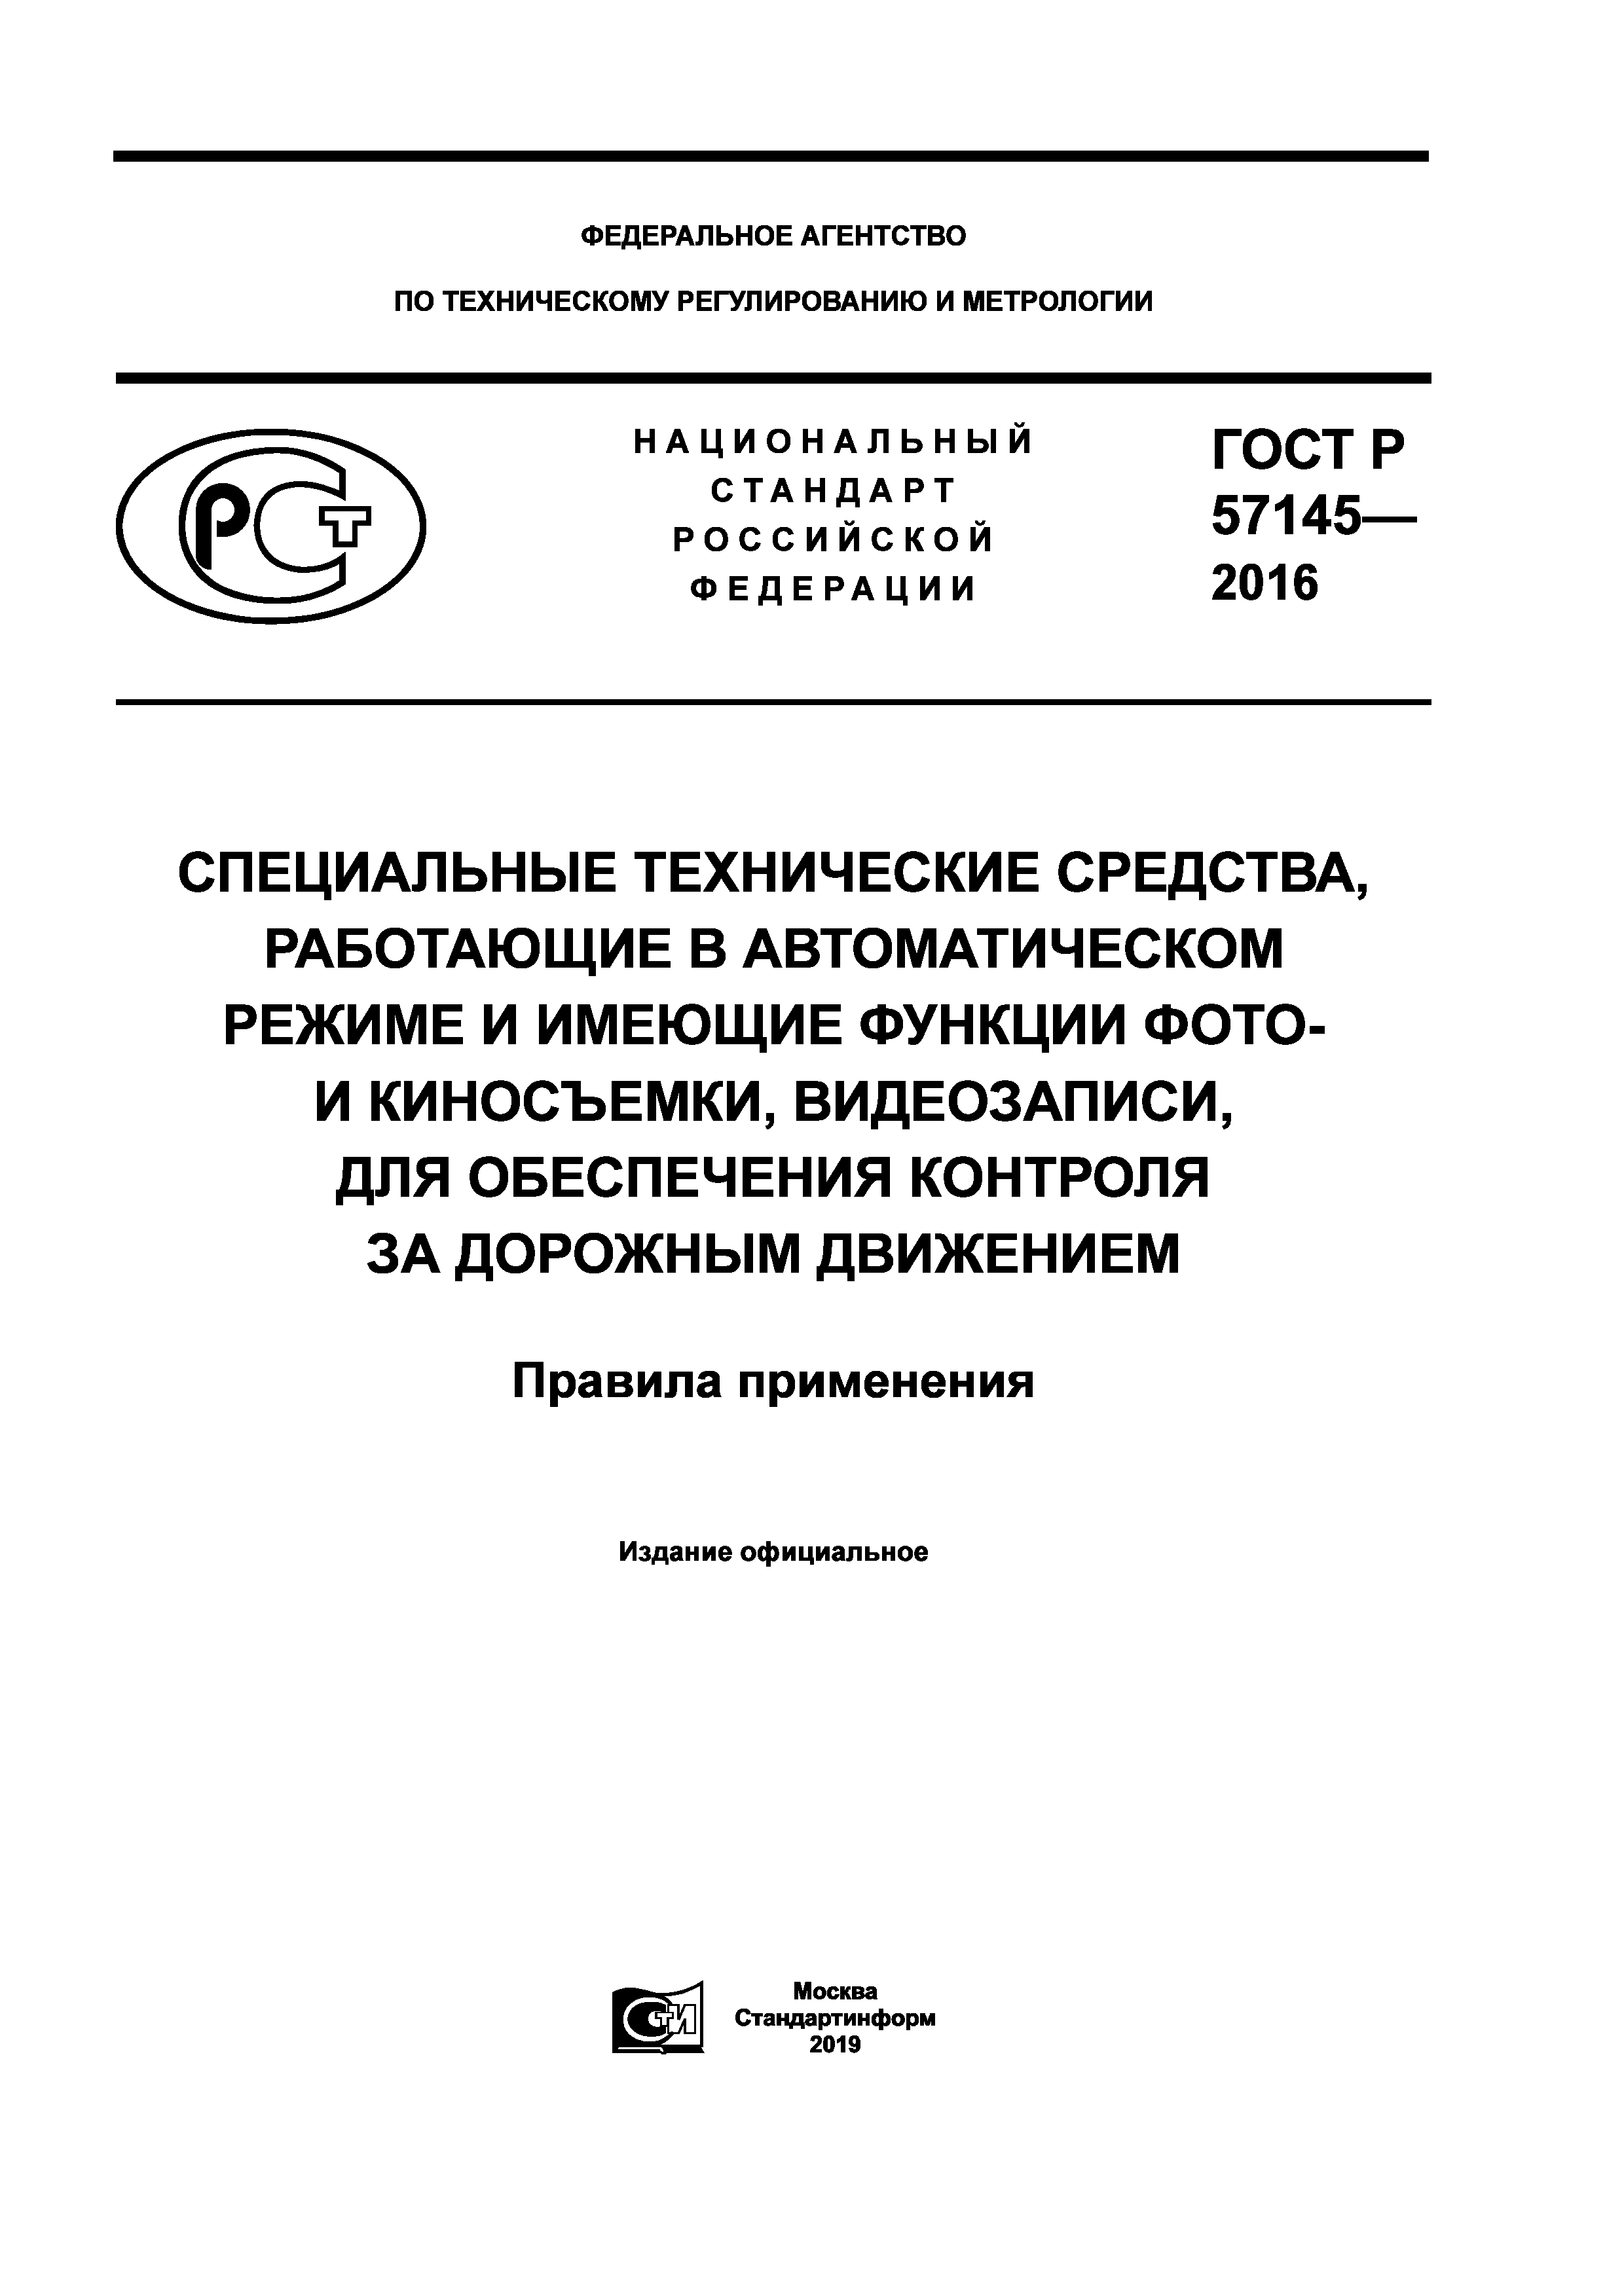 ГОСТ Р 57145-2016